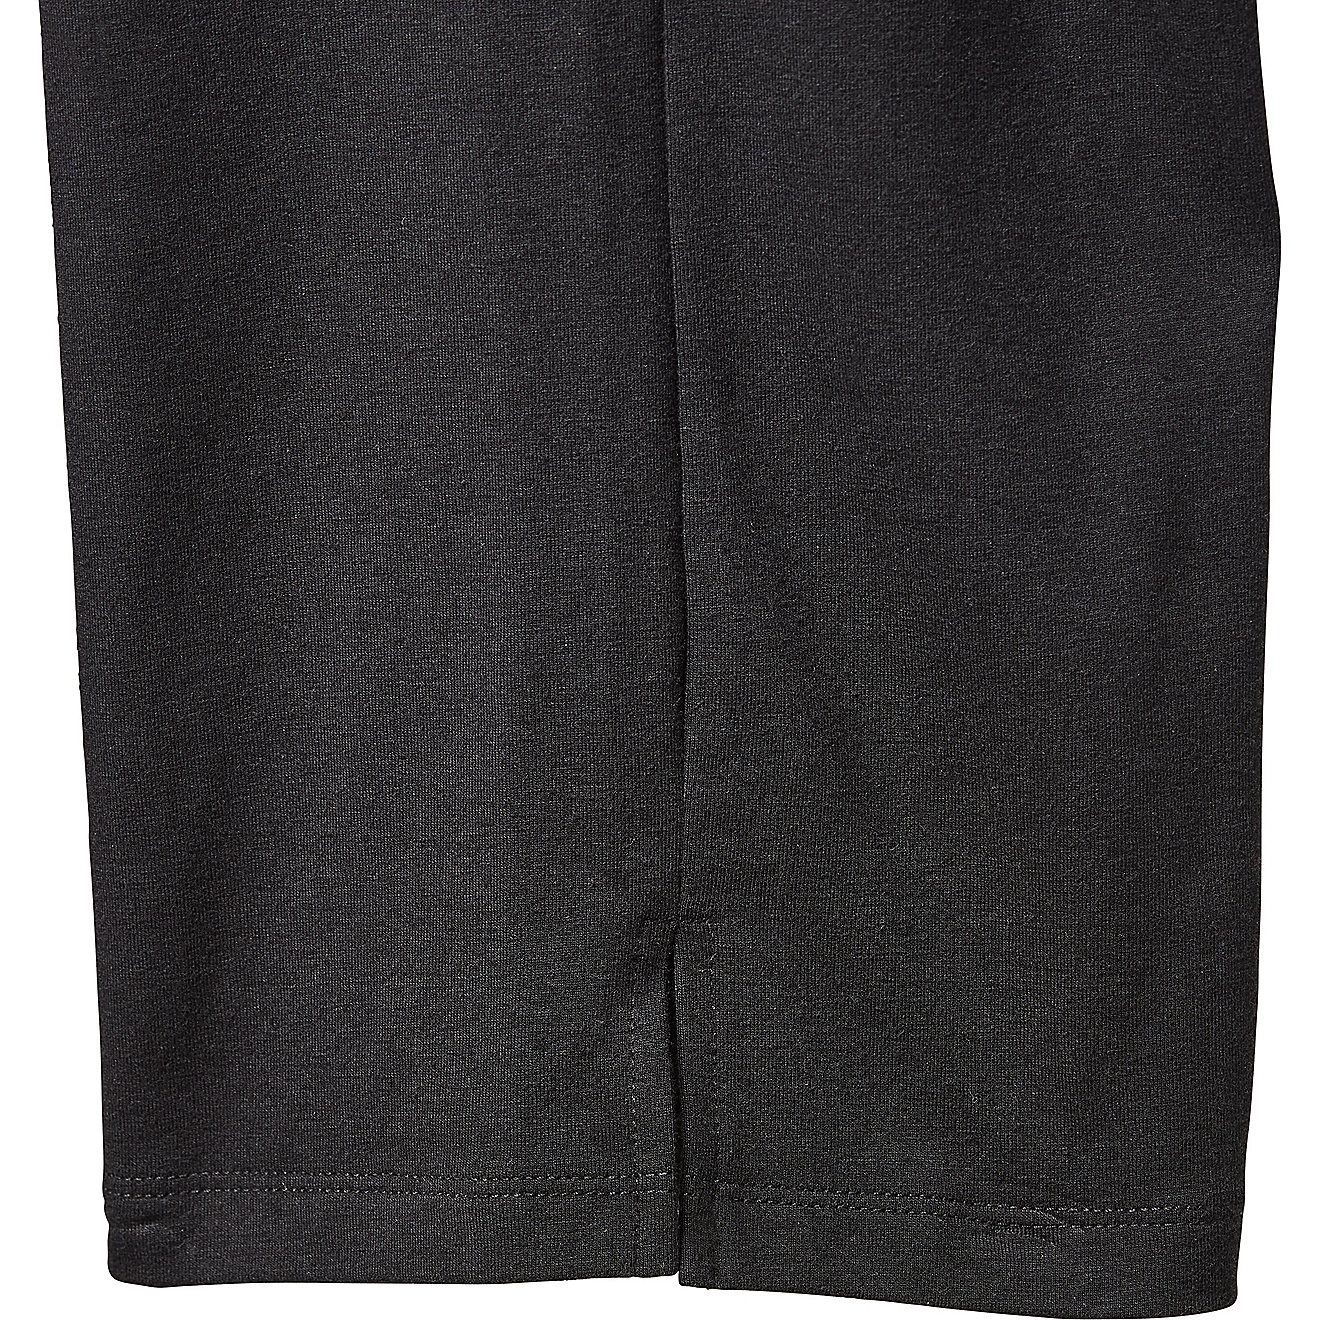 BCG Women's Plus Size Cotton Wicking Pants